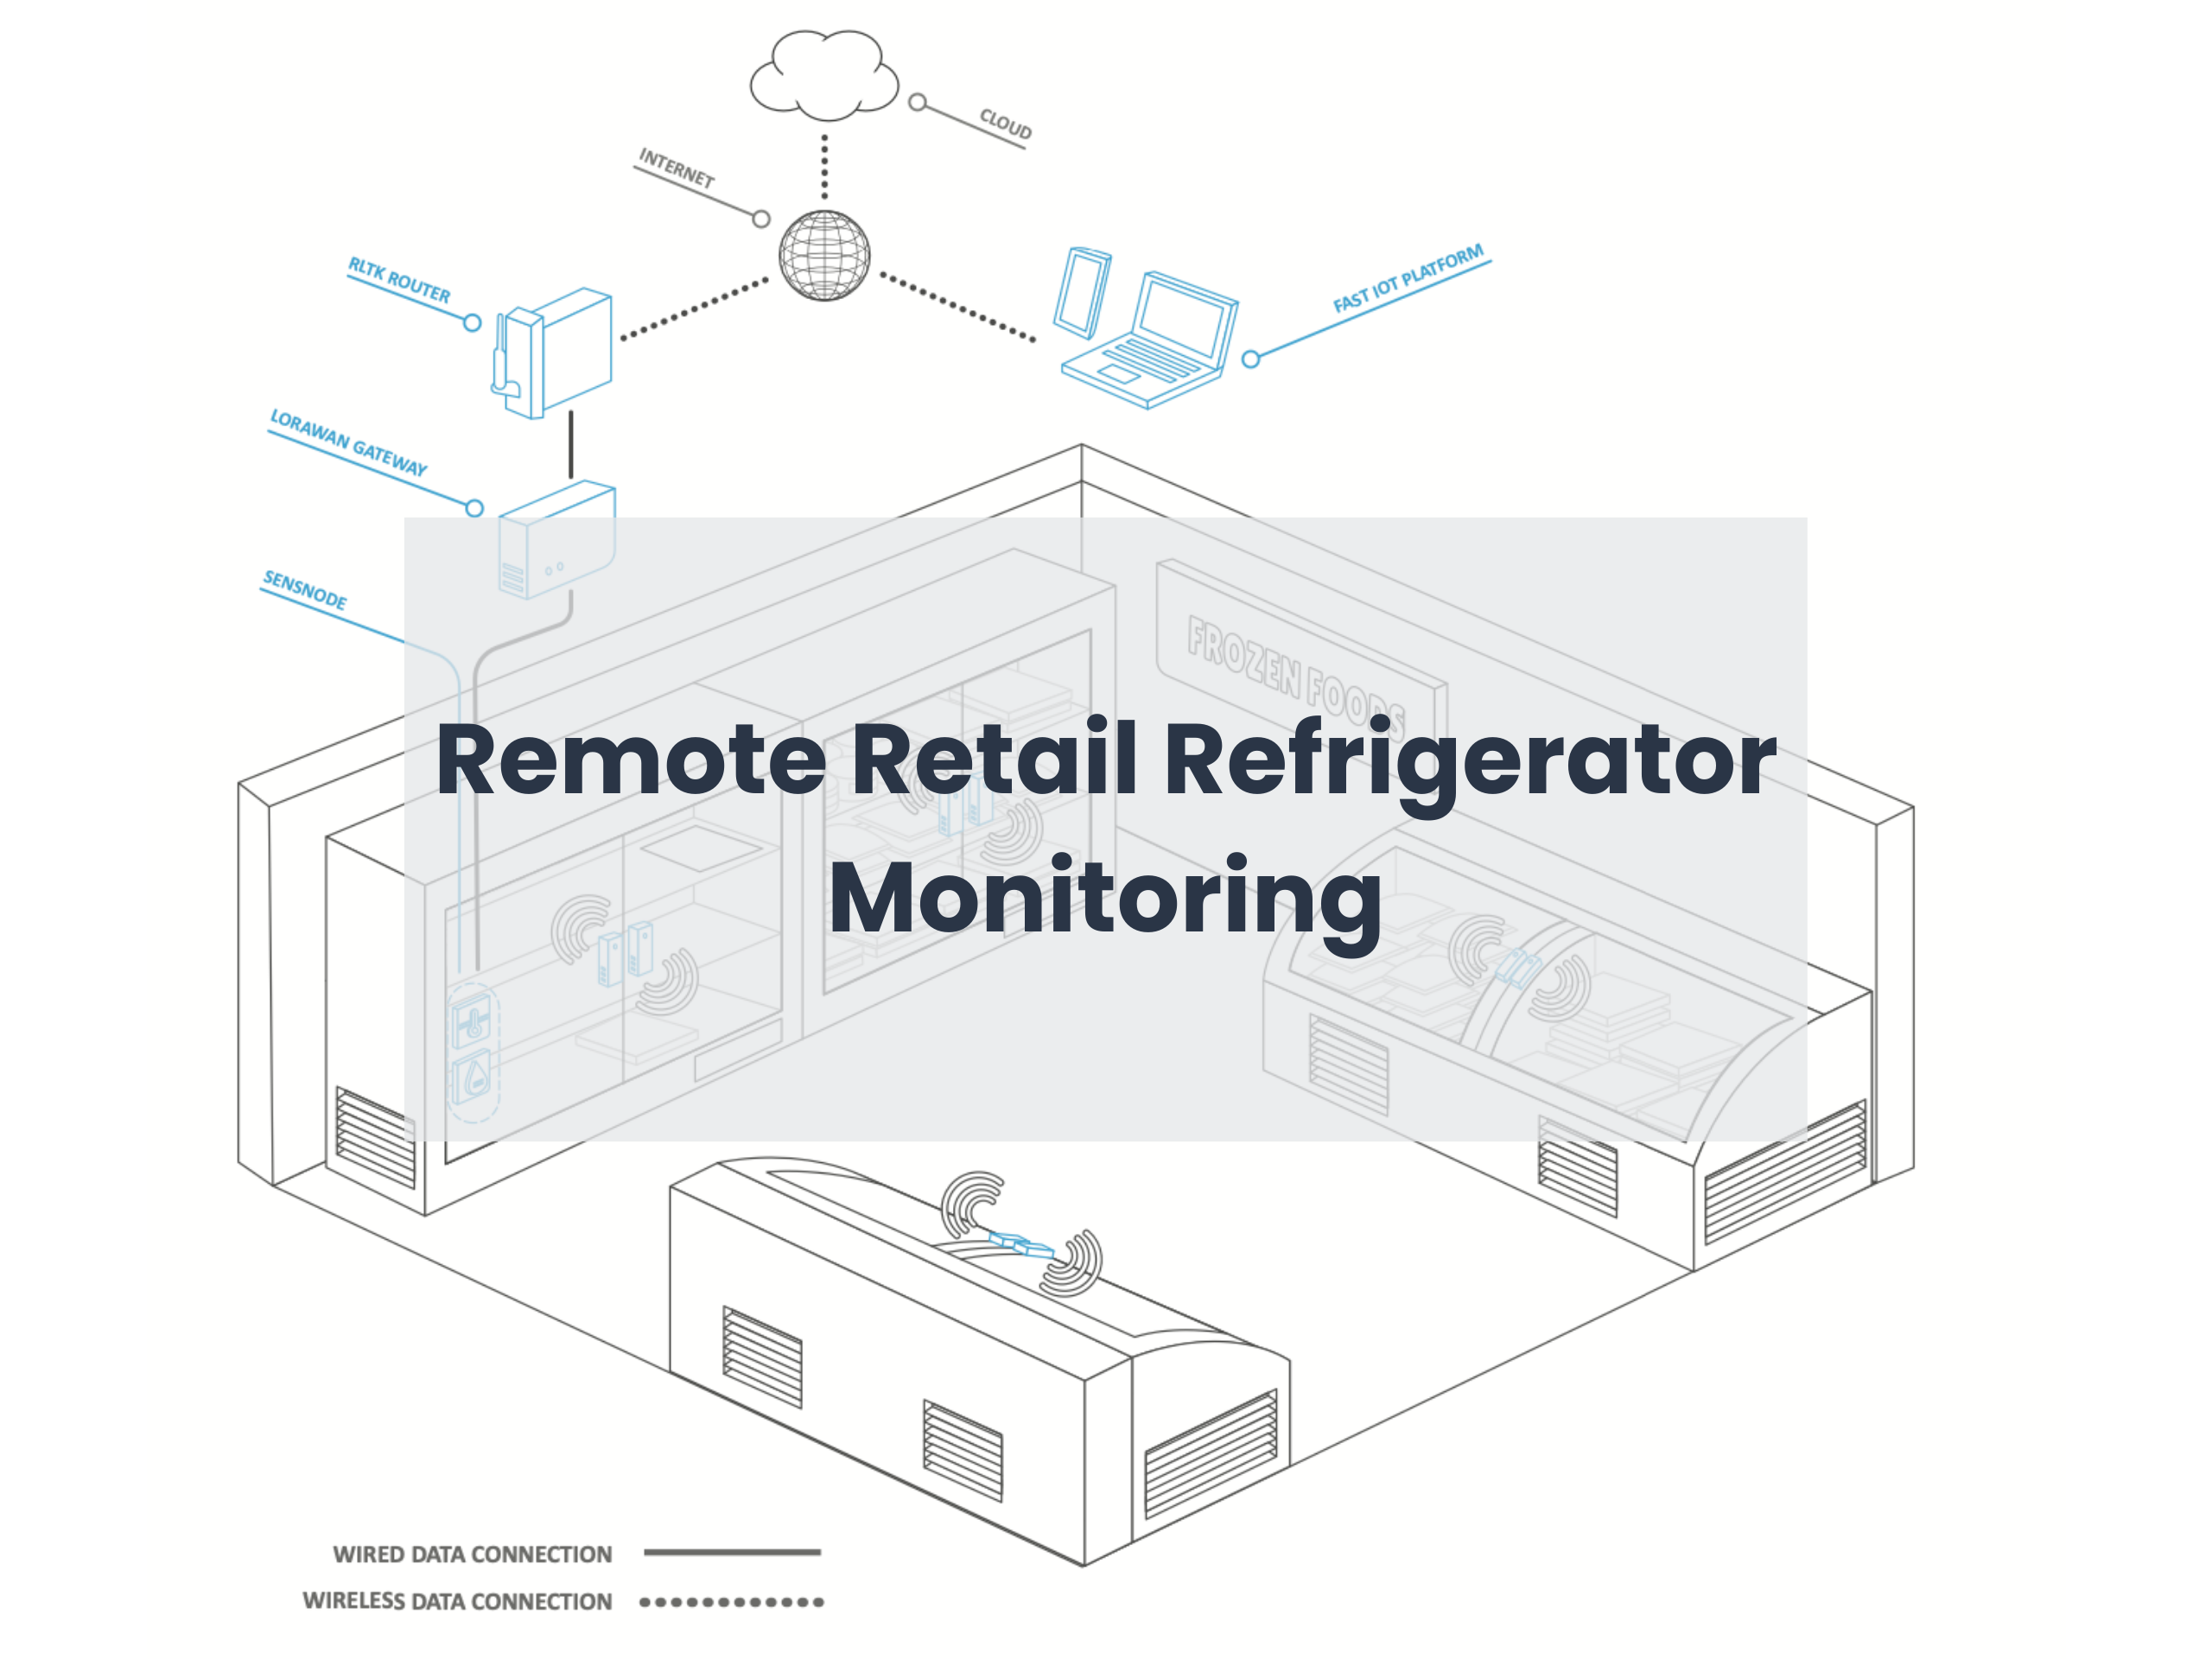 Remote Retail Refrigerator Monitoring